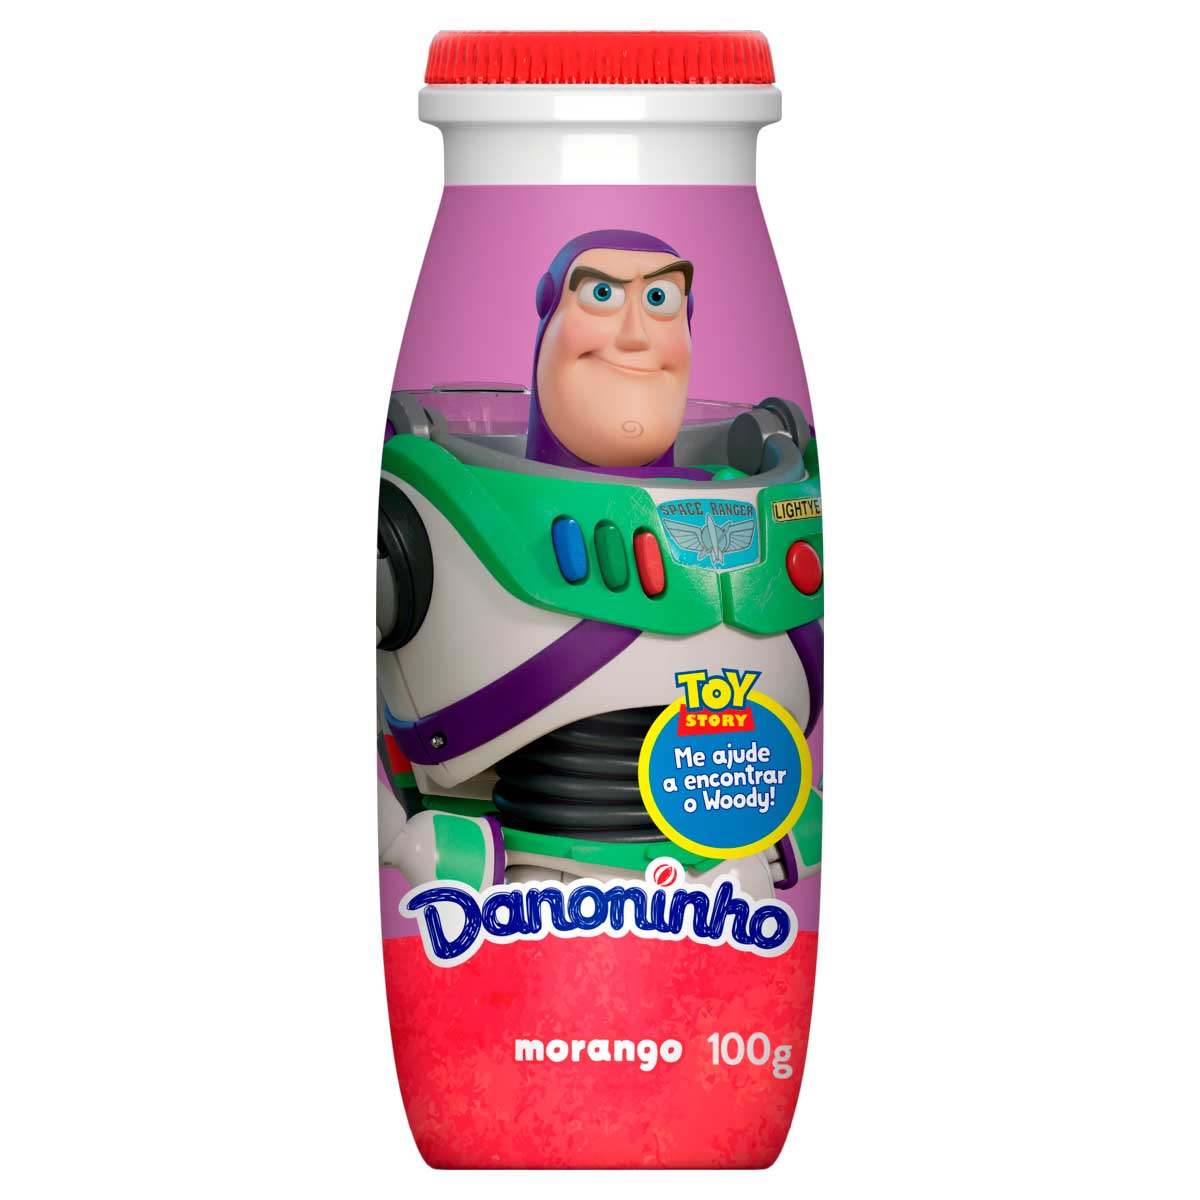 iogurte-danoninho-liquido-morango-100g-1.jpg